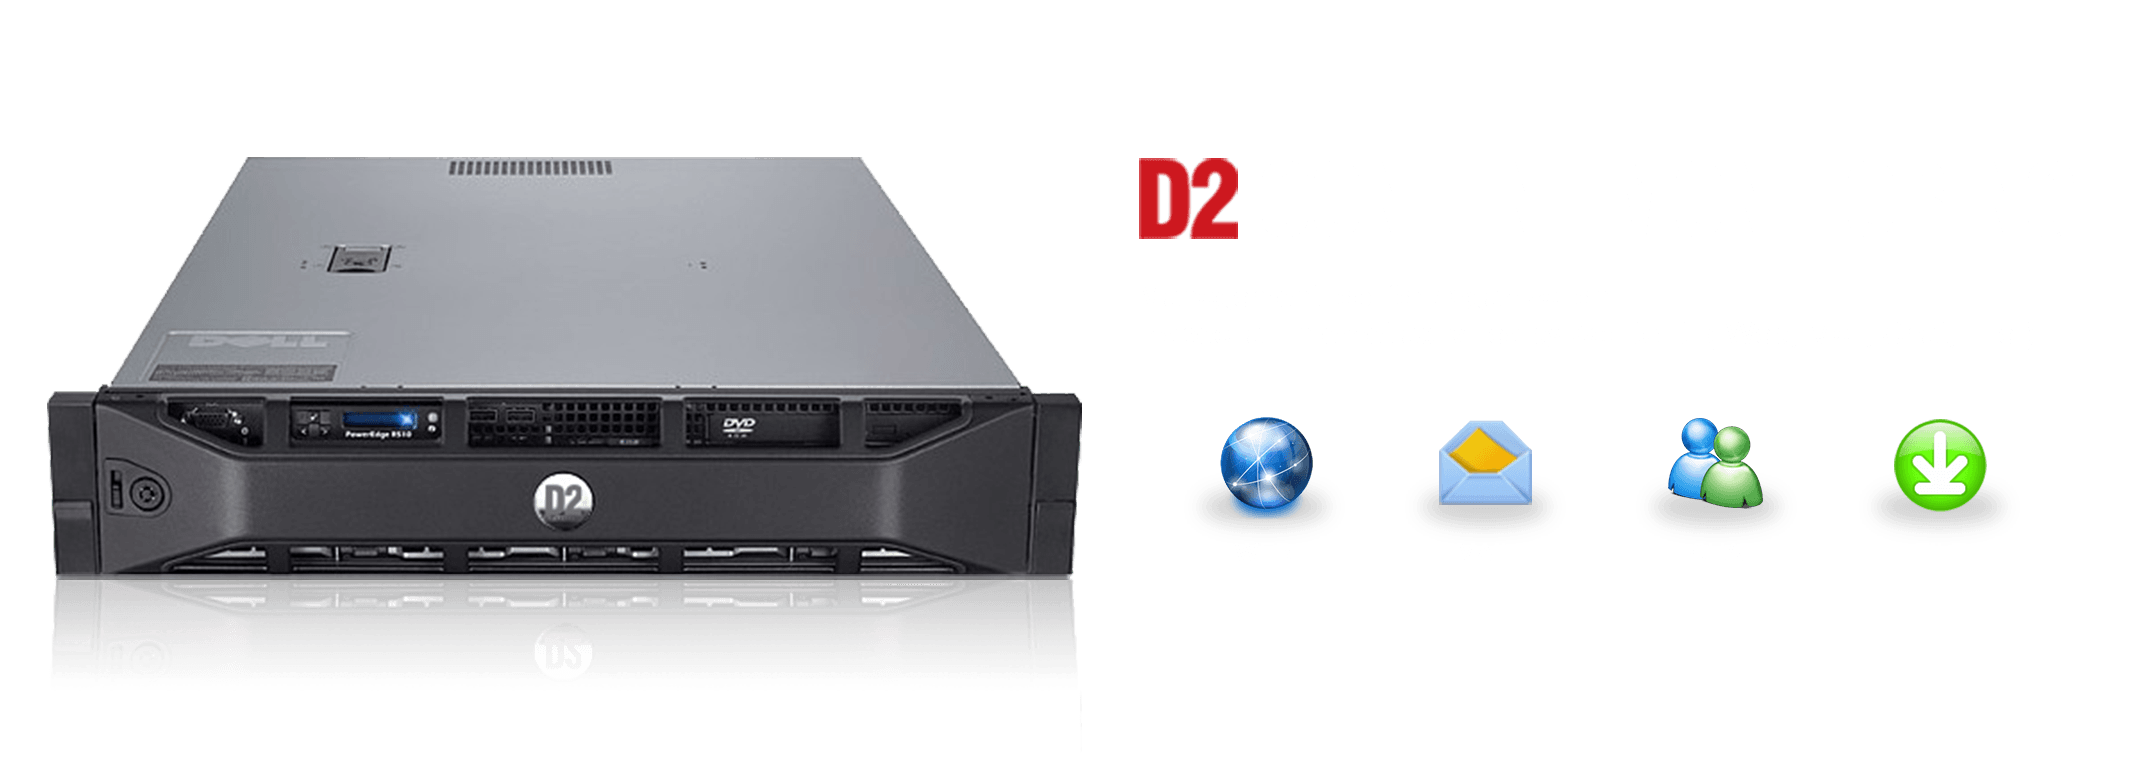 D2 content monitoring